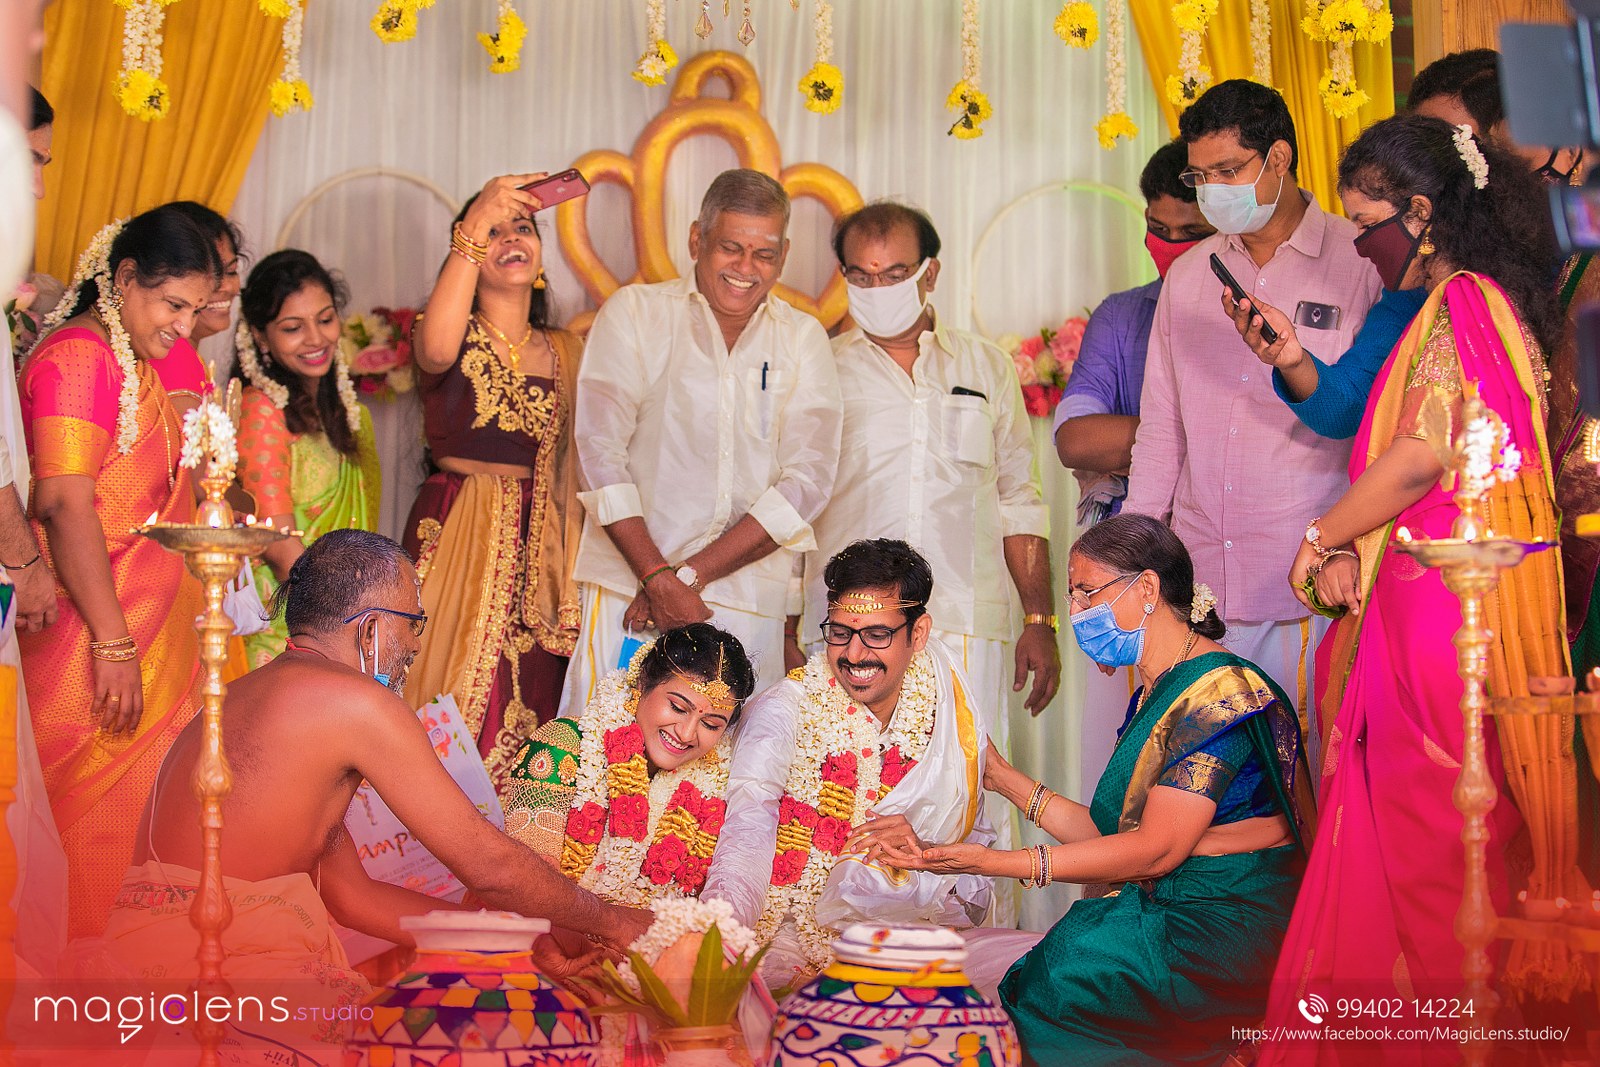 Celebration and tradition of Hindu  weddings